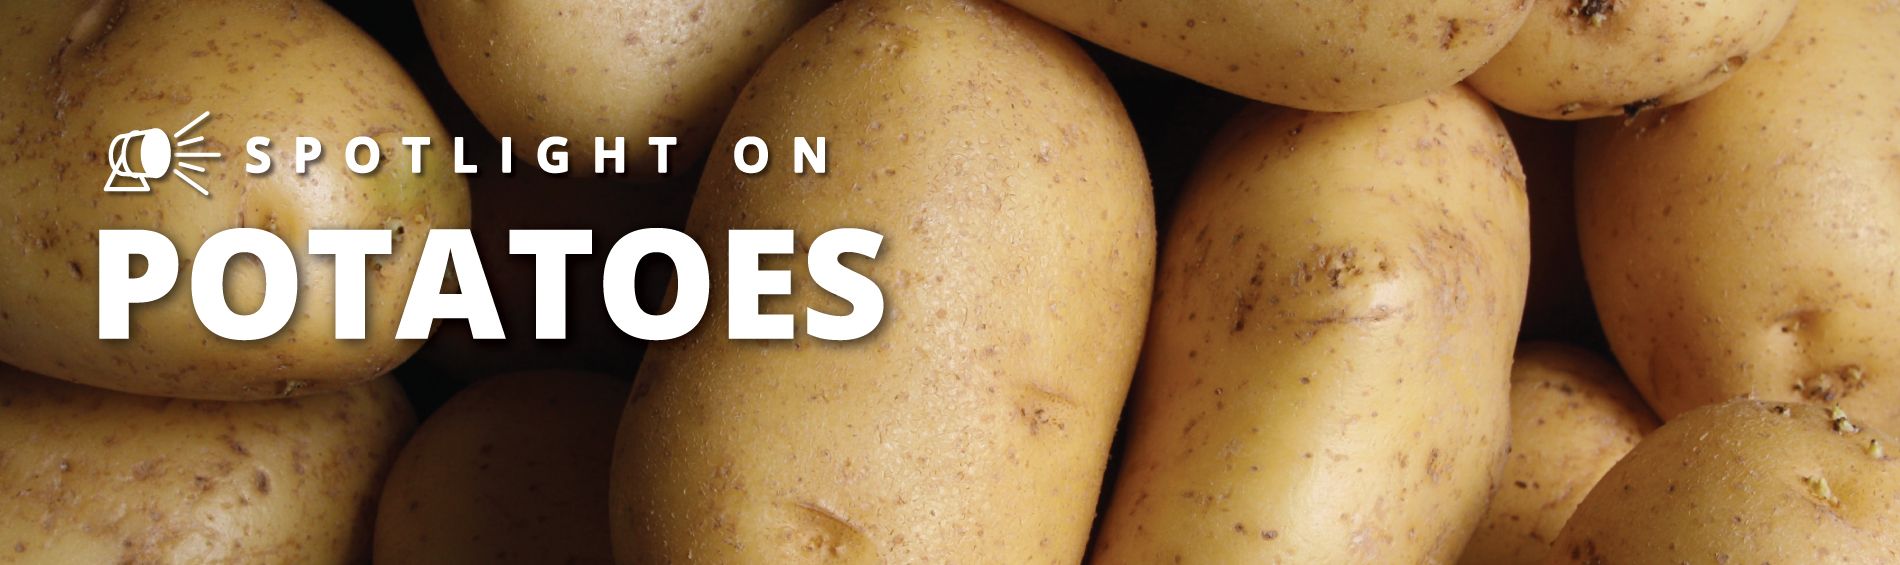 Spotlight Series on Potatoes